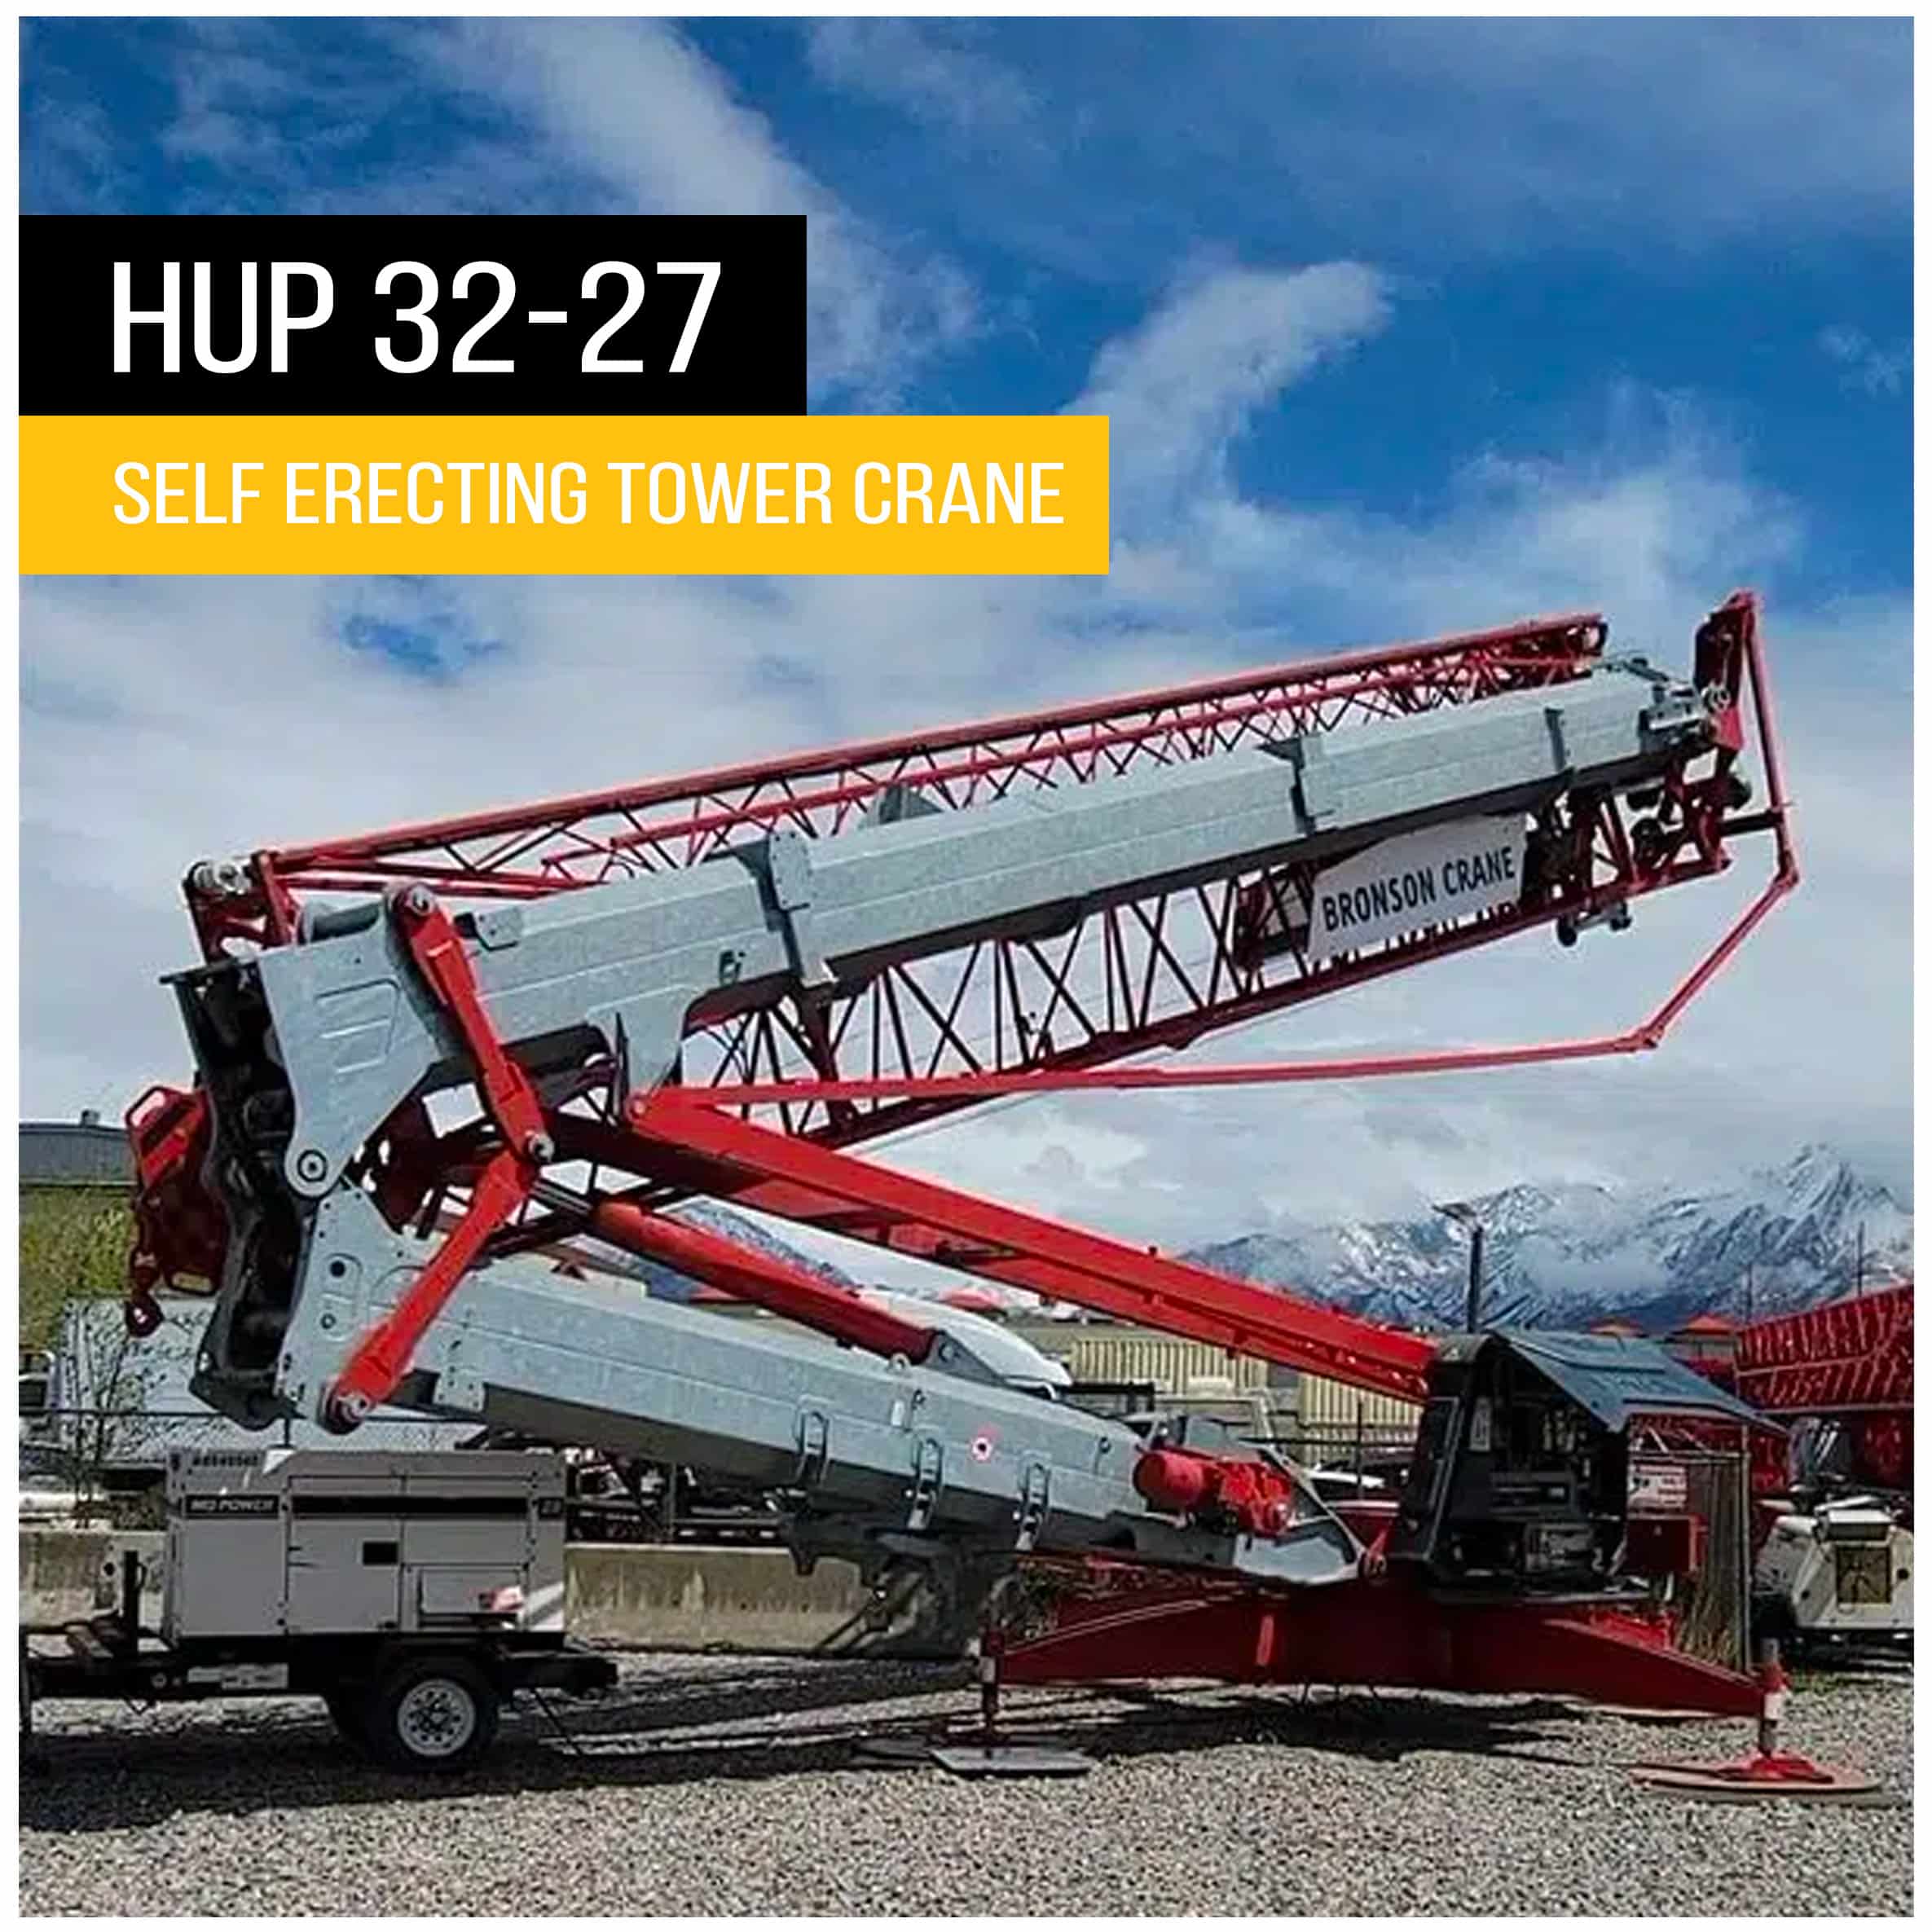 HUP 32-27 crane rental service utah